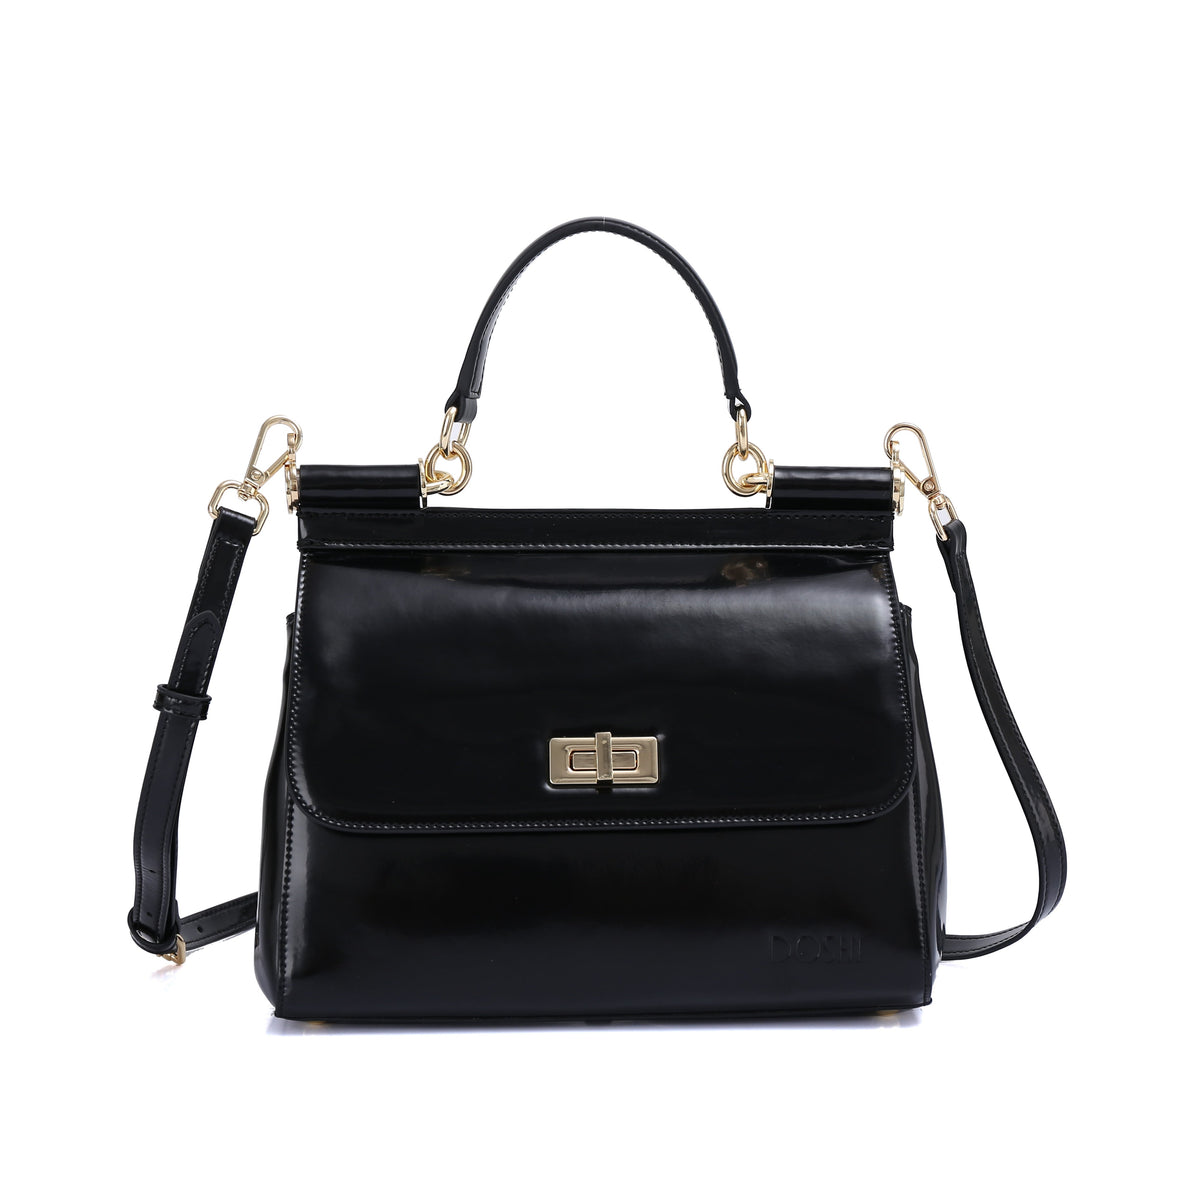 Lady Bag 3 - Semi-Patent Black